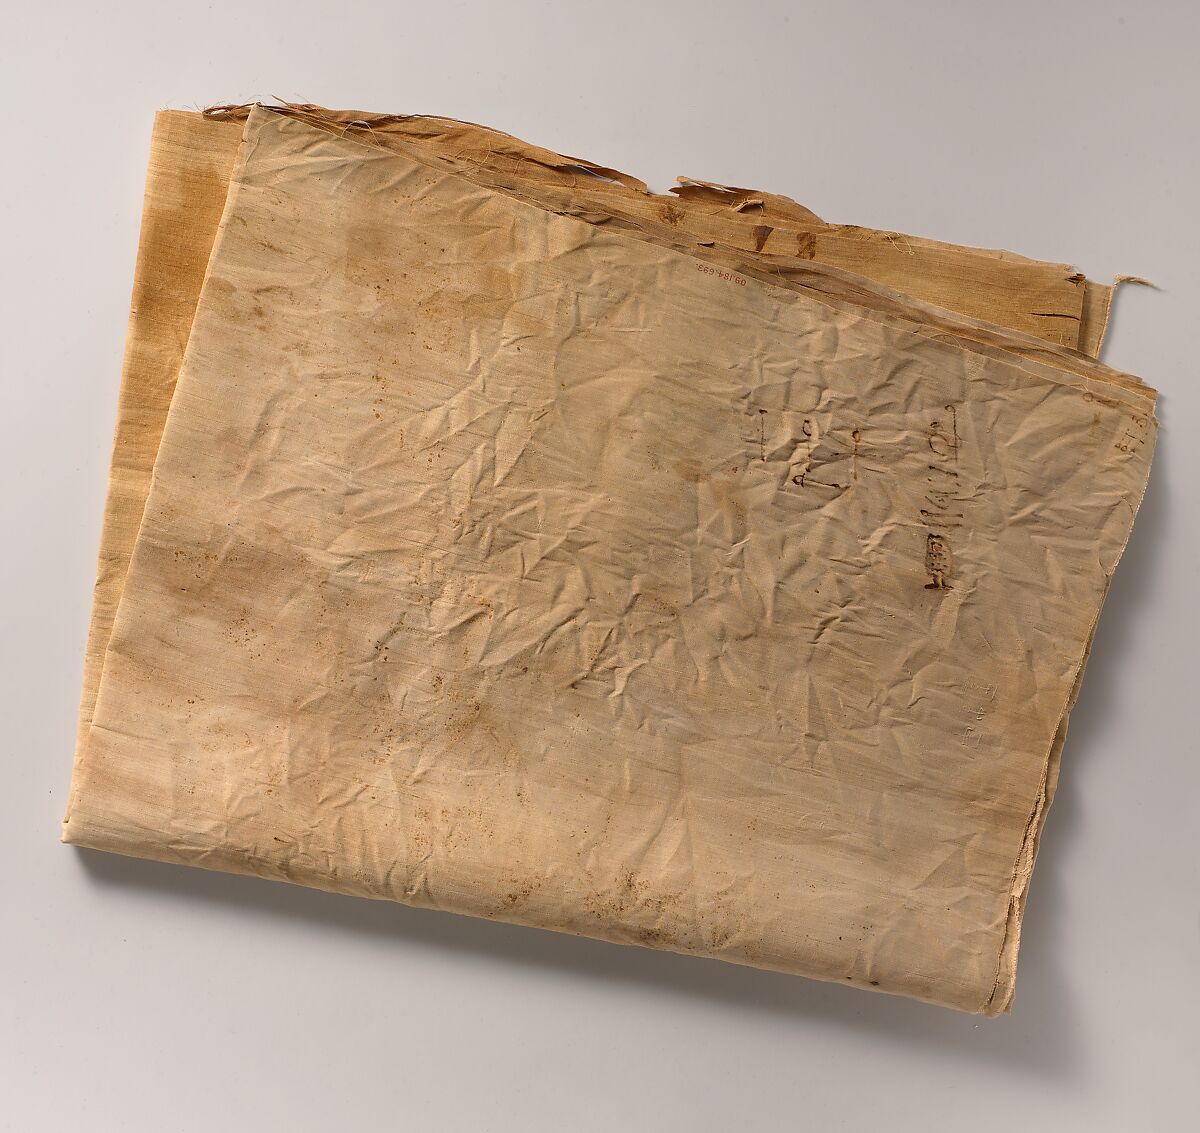 Inscribed Linen Sheet from Tutankhamun's Embalming Cache